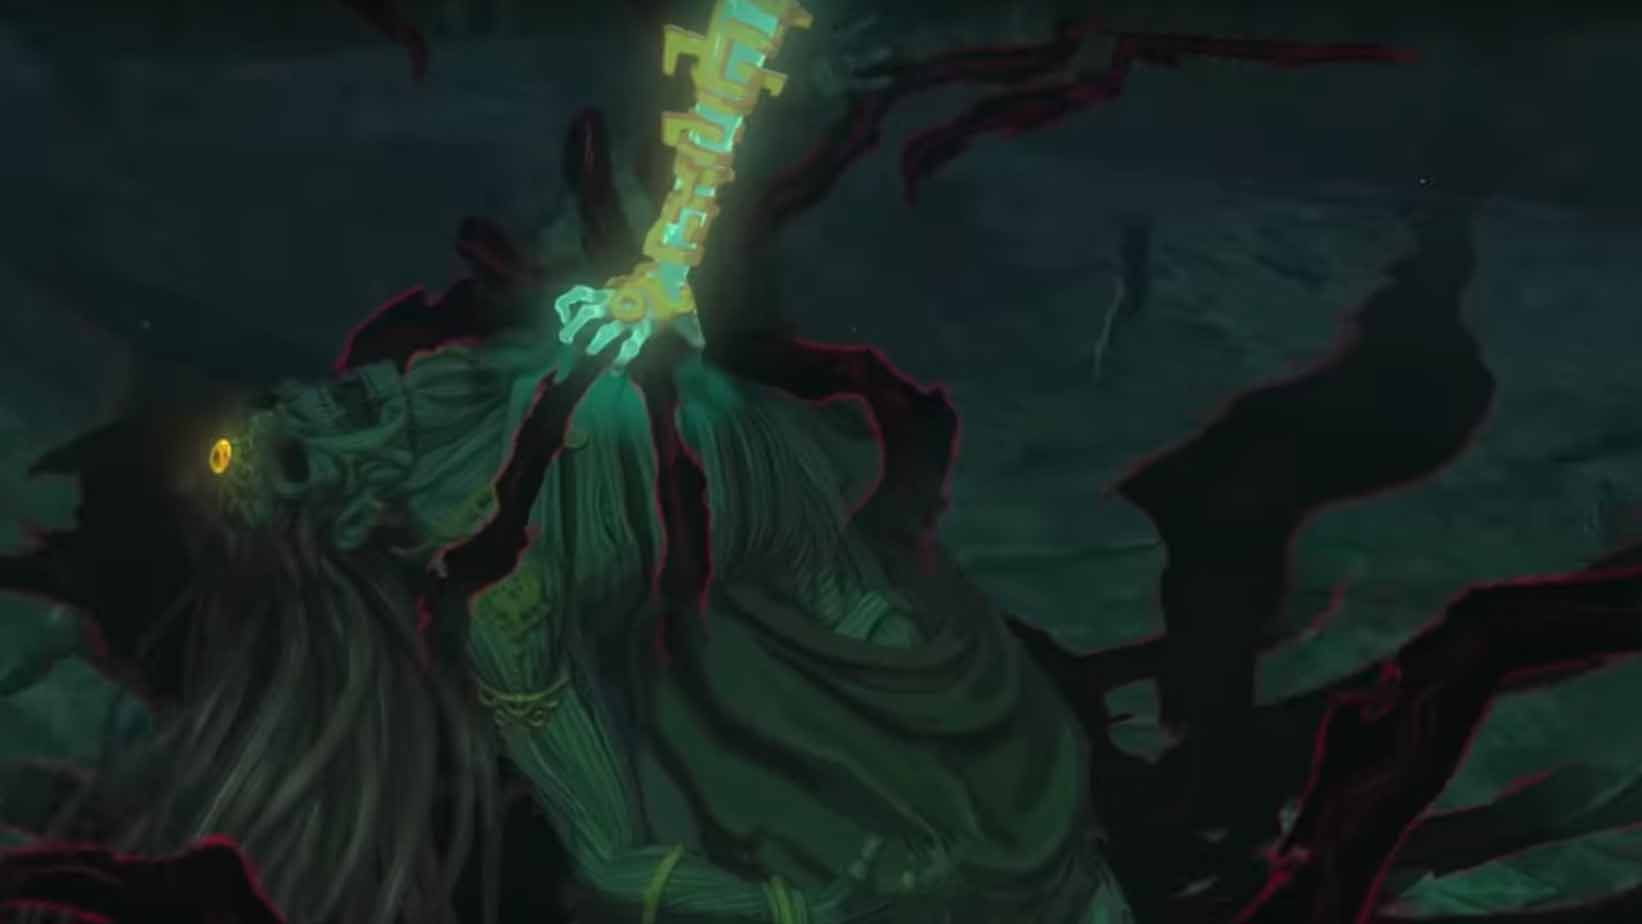 Breath of the Wild 2 trailer screenshot showing a Gerudo corpse